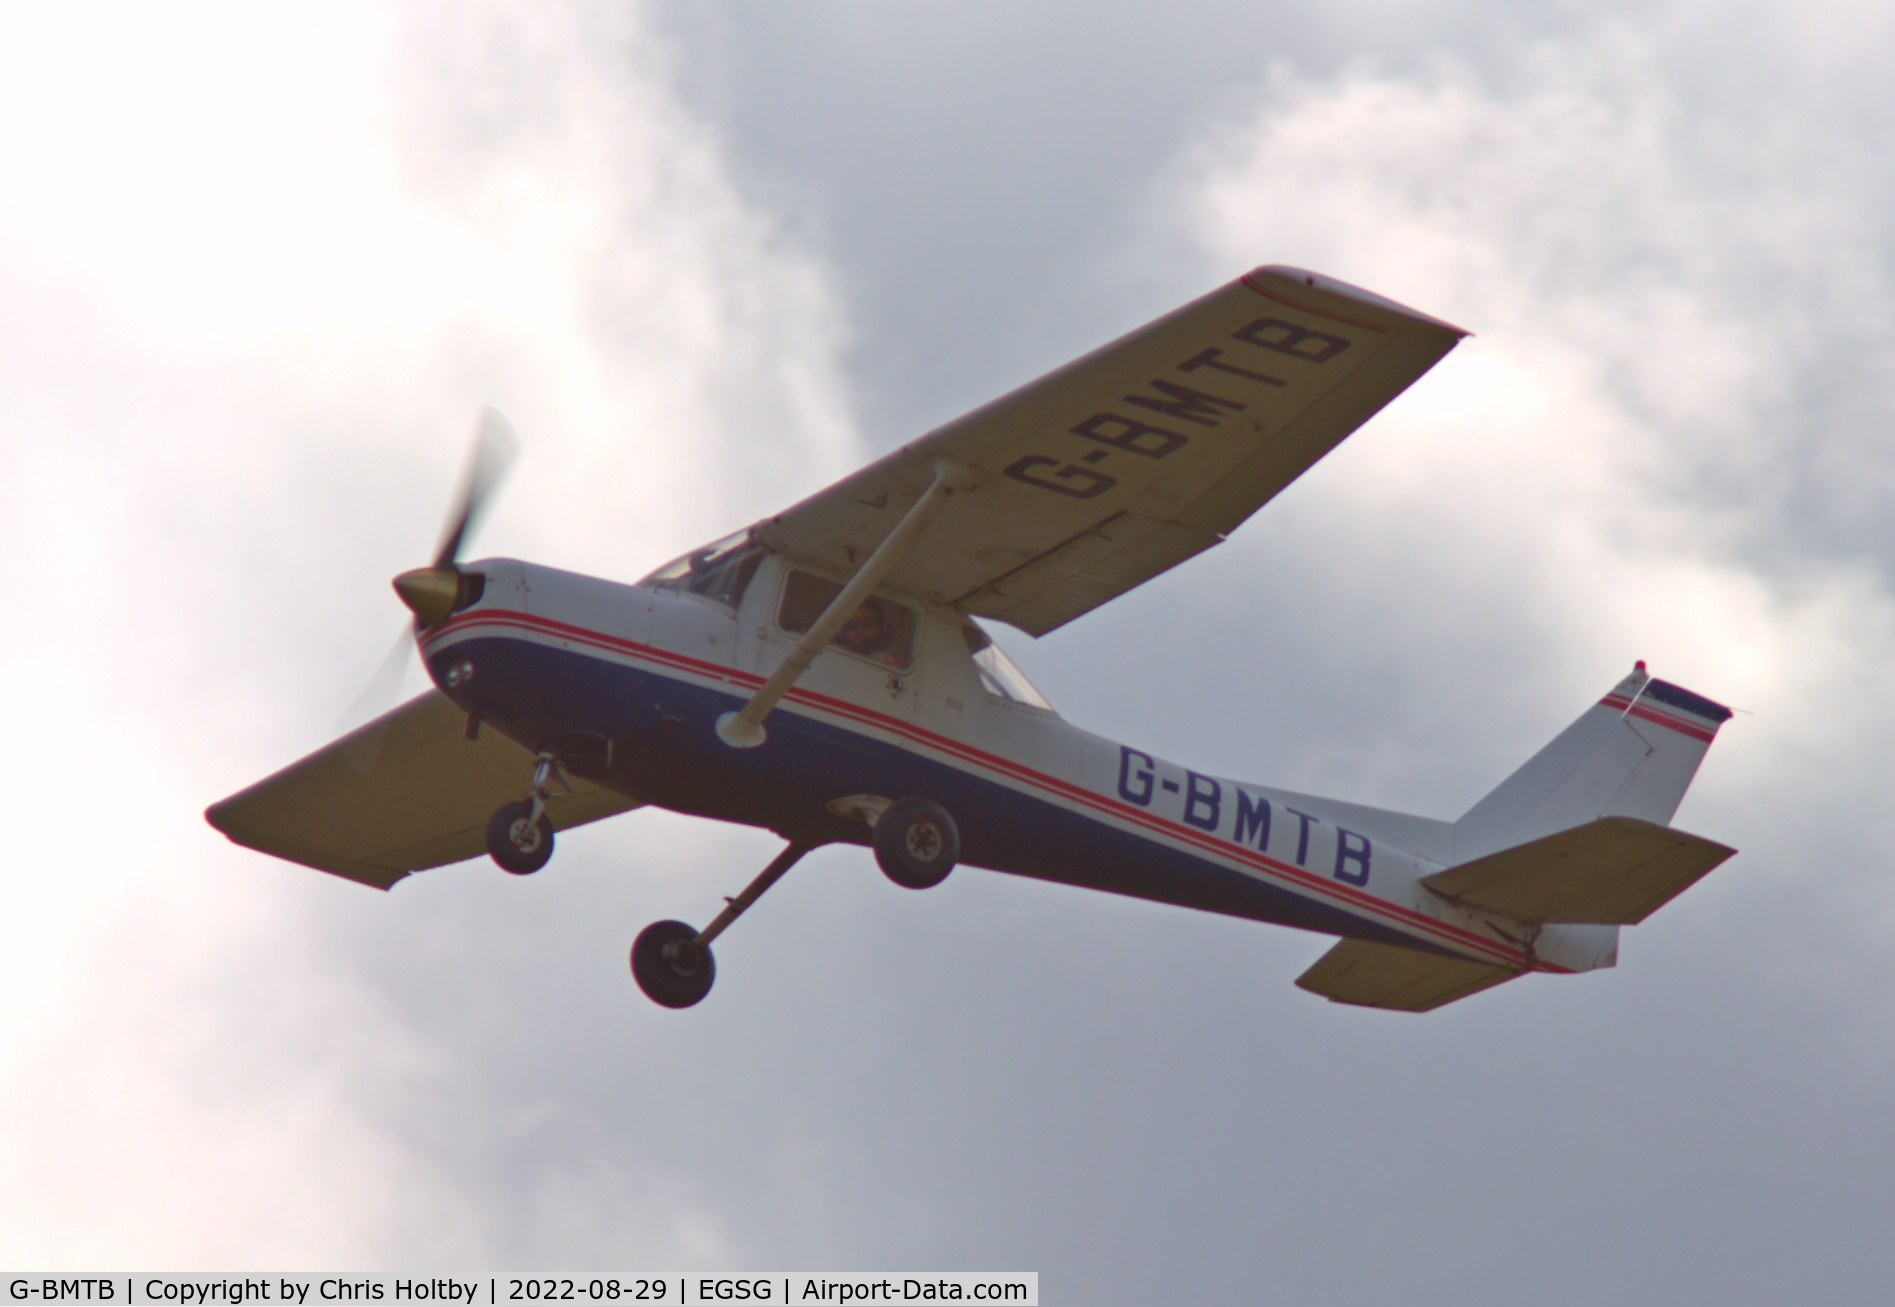 G-BMTB, 1977 Cessna 152 C/N 152-80672, Taken off from Stapleford Tawney, Essex